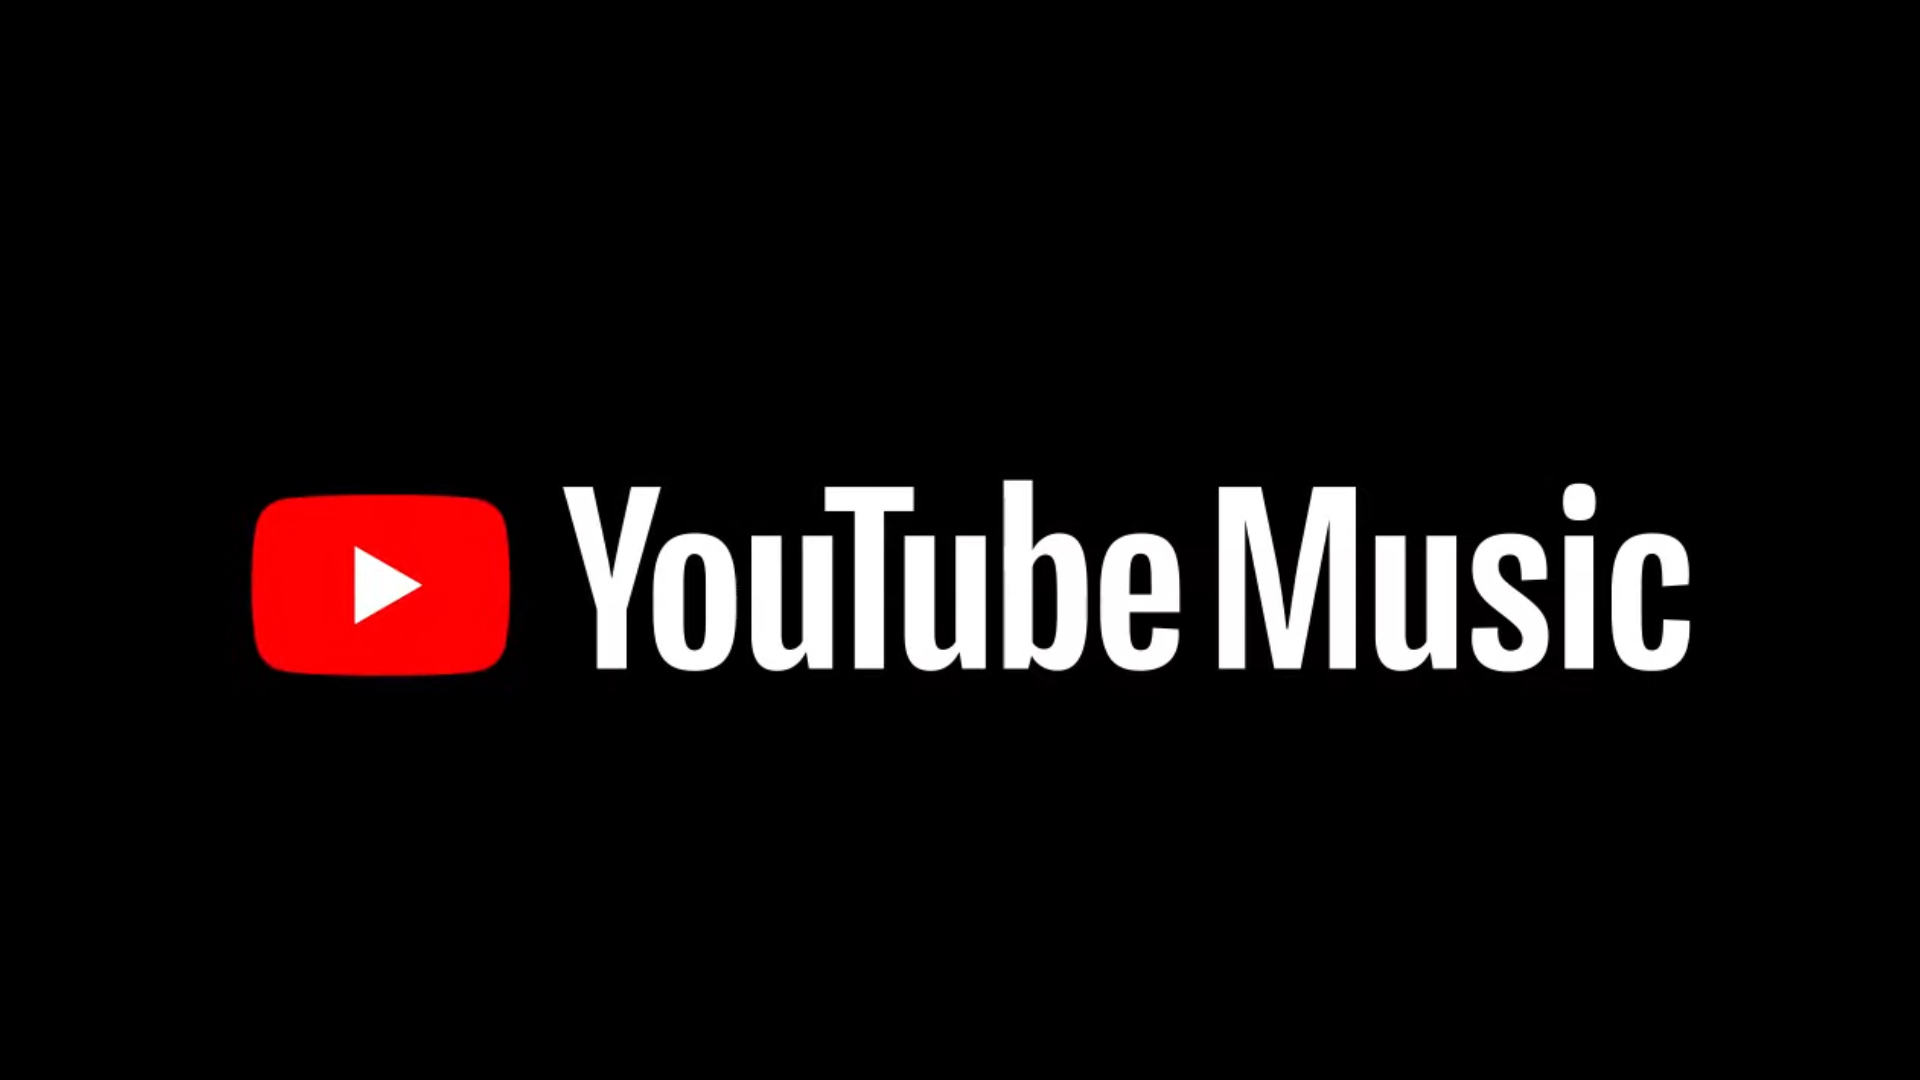 Youtube музыка популярное. YOUTUBER. Эмблема ютуб. Youtube Music логотип. M youtube.